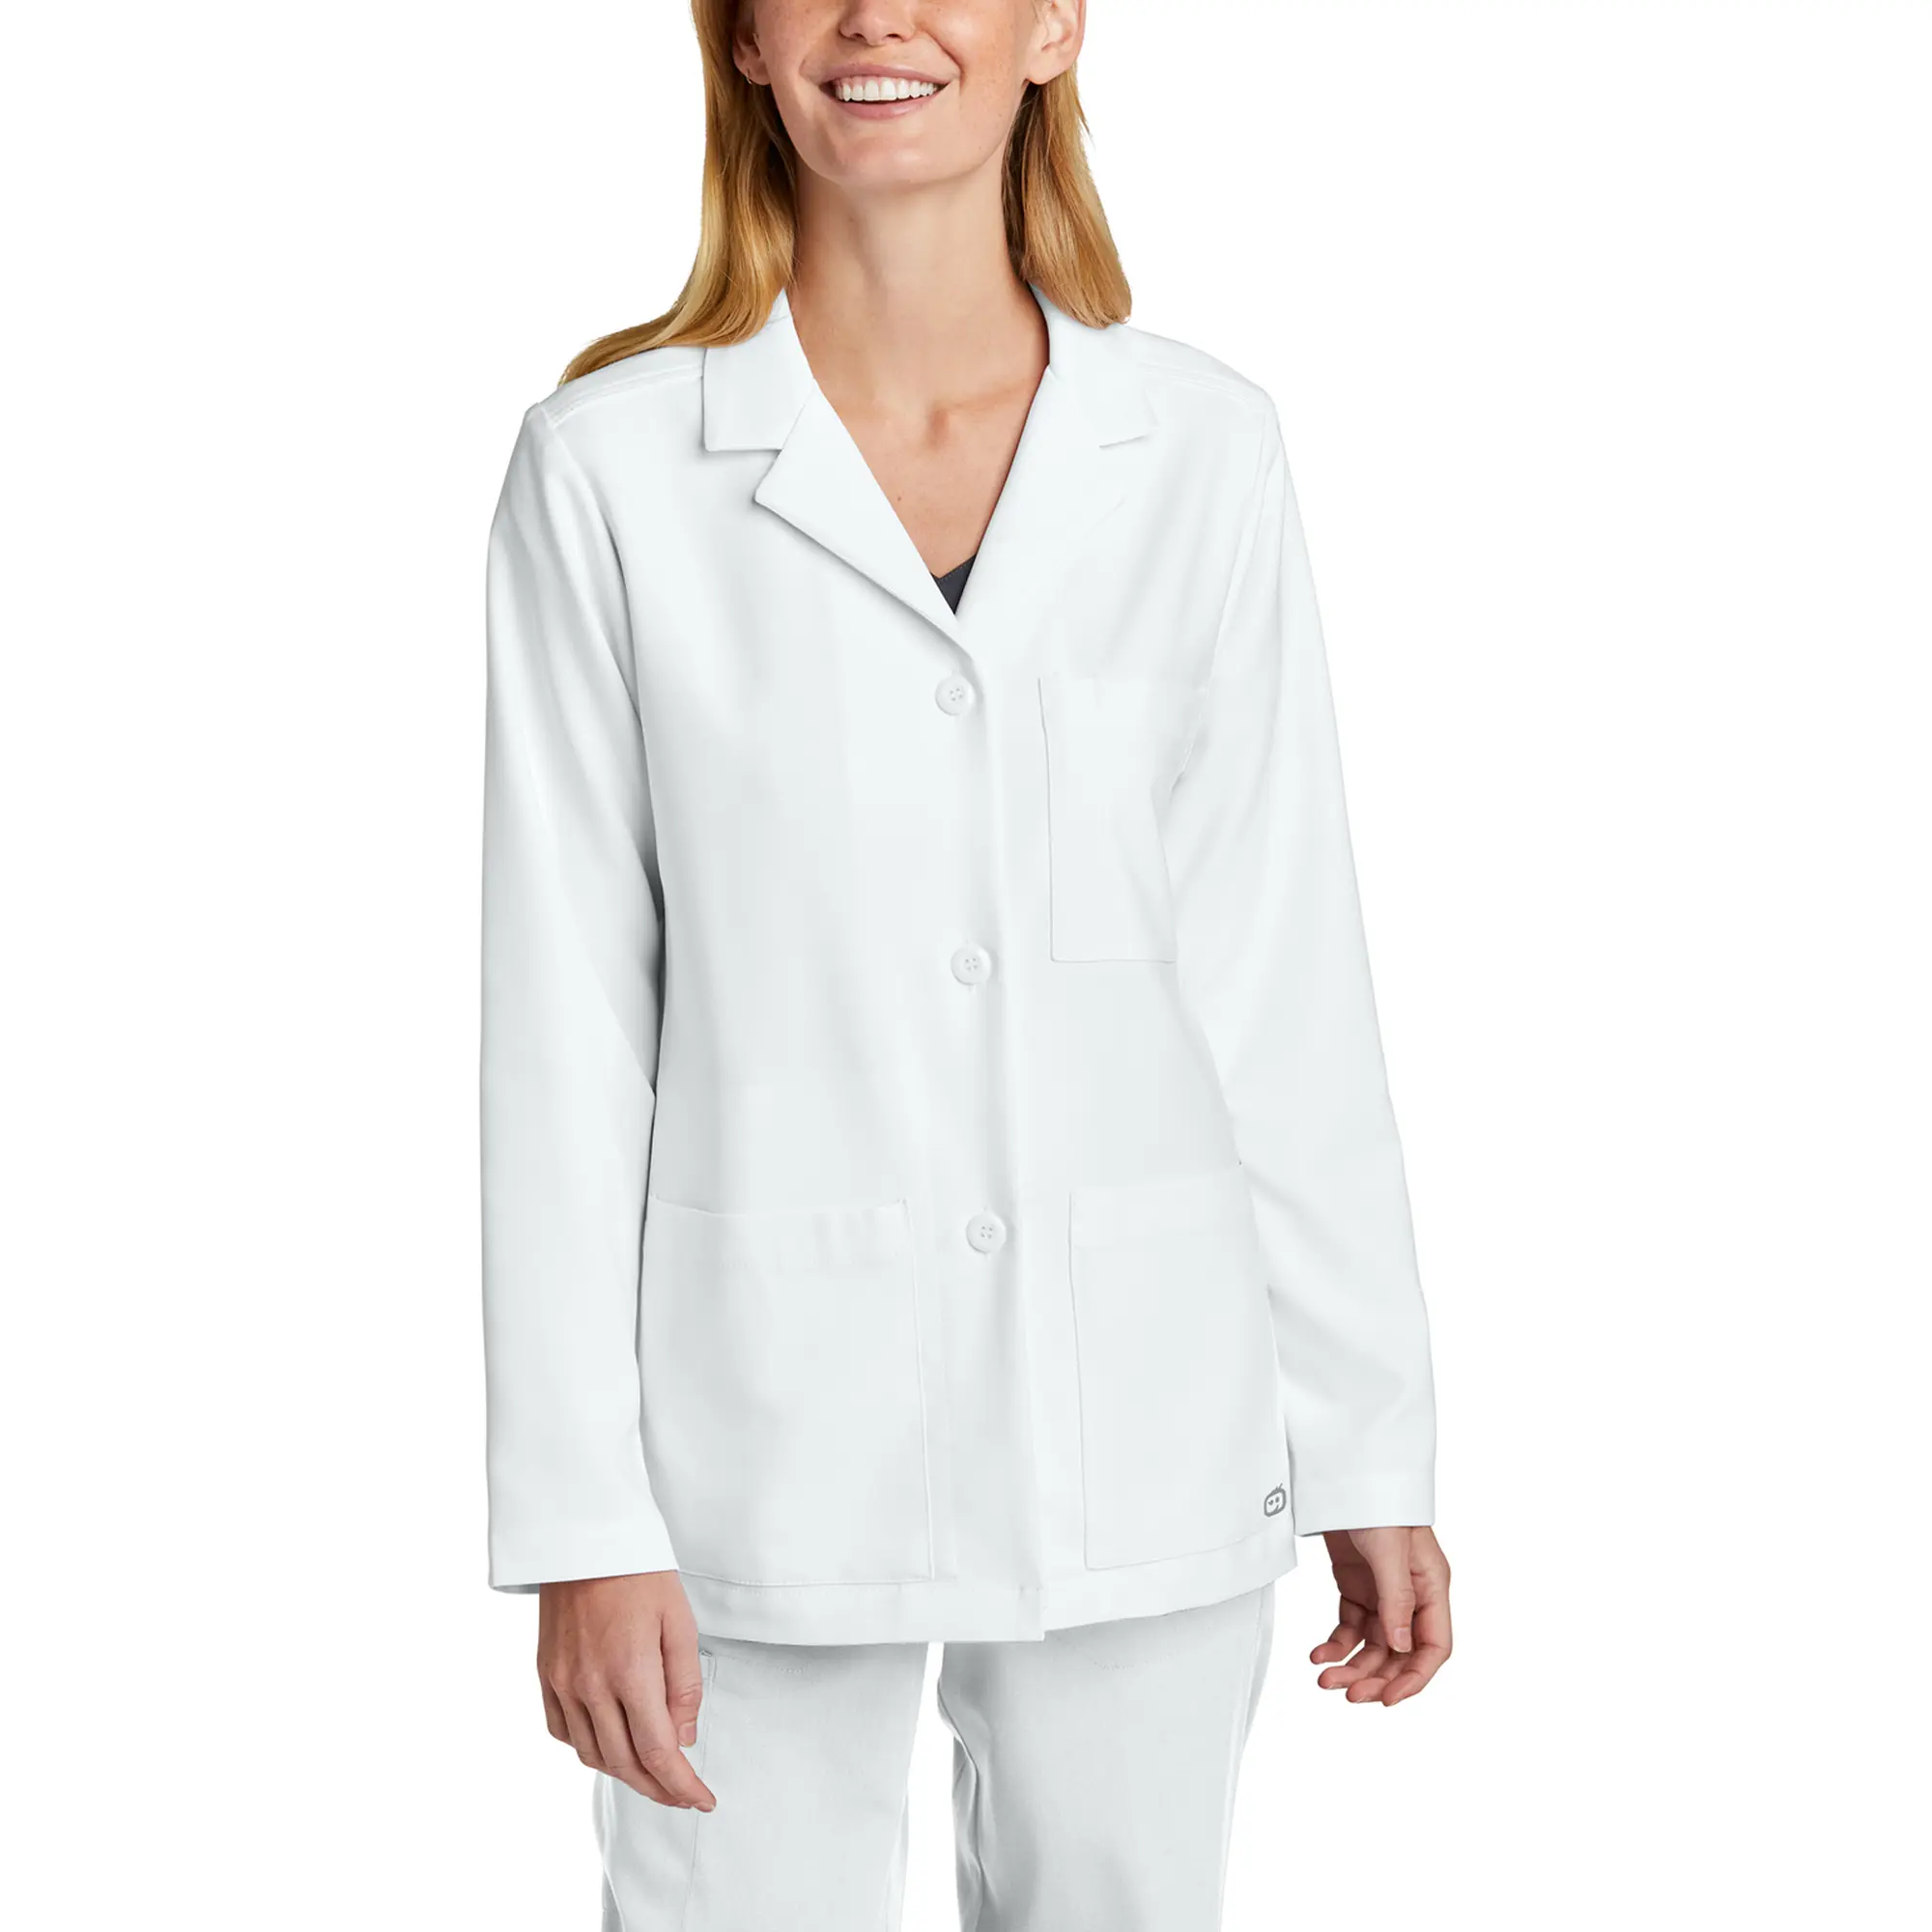 White wonderwink women consultation lab coat.